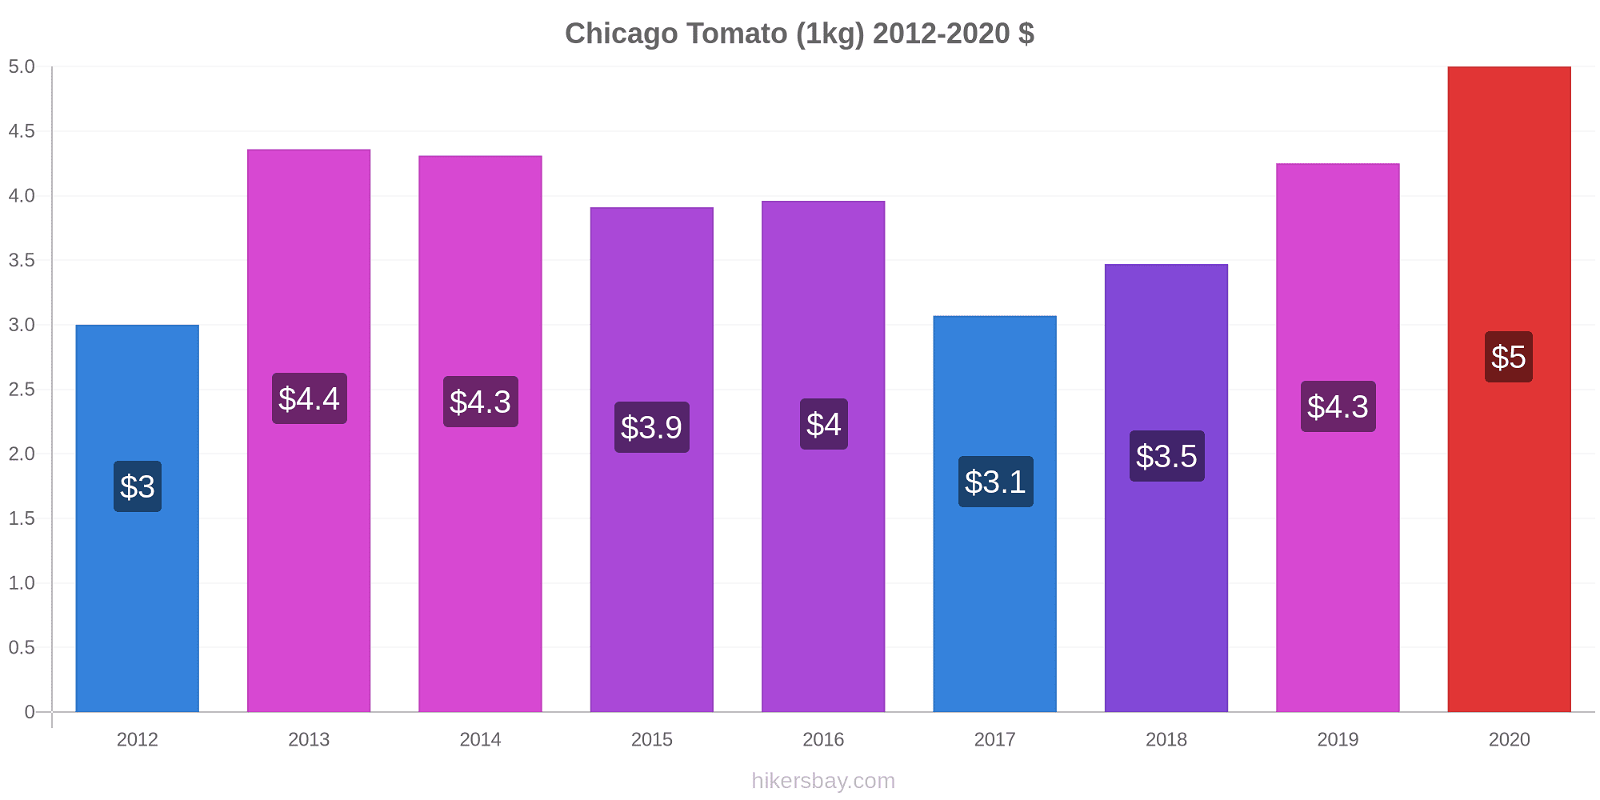 Chicago price changes Tomato (1kg) hikersbay.com